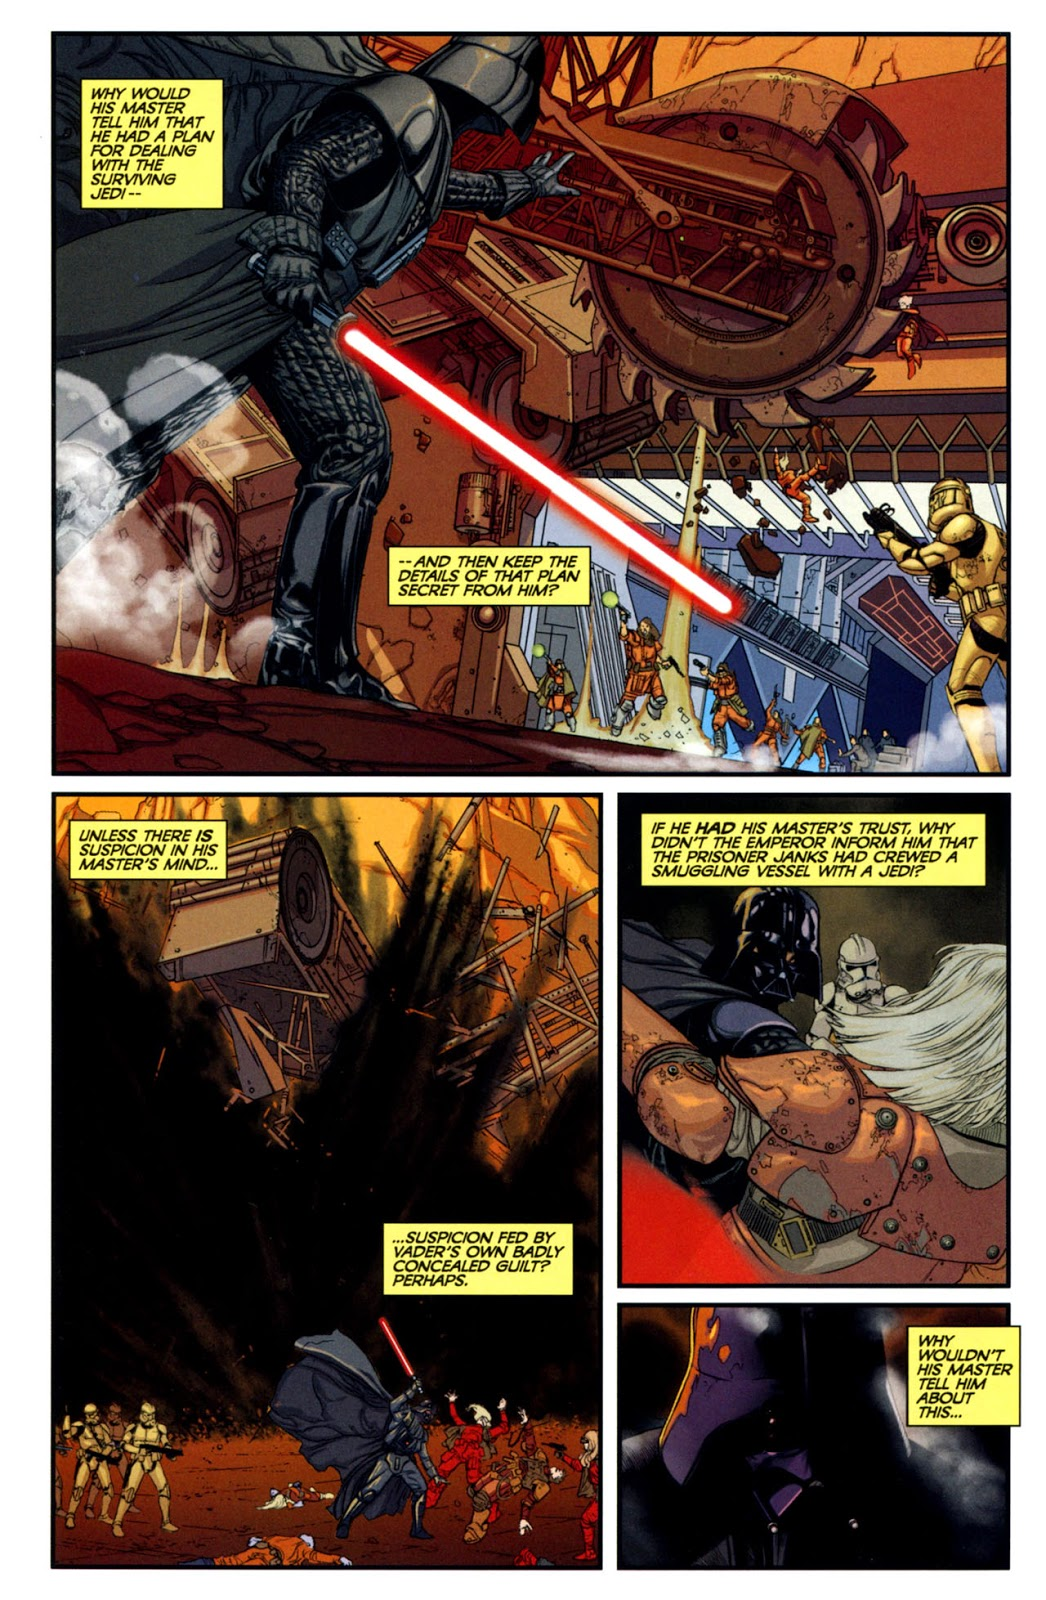 SS - Darth Vader (ISV) vs. Darth Tyranus (IG) - Page 2 -Kn5iloyBhcnLb0cAkFK4s7GRcHP8OXjRI6UAiK7KzXFqpVGzKTMKbdwq8UzezCSdTQe1NNFuDDgrCf5IXO3q8kGZFlbhrIwg7Spo4ydxNorXLkpLM0_soDBujuT_wAPXeGfMPL5